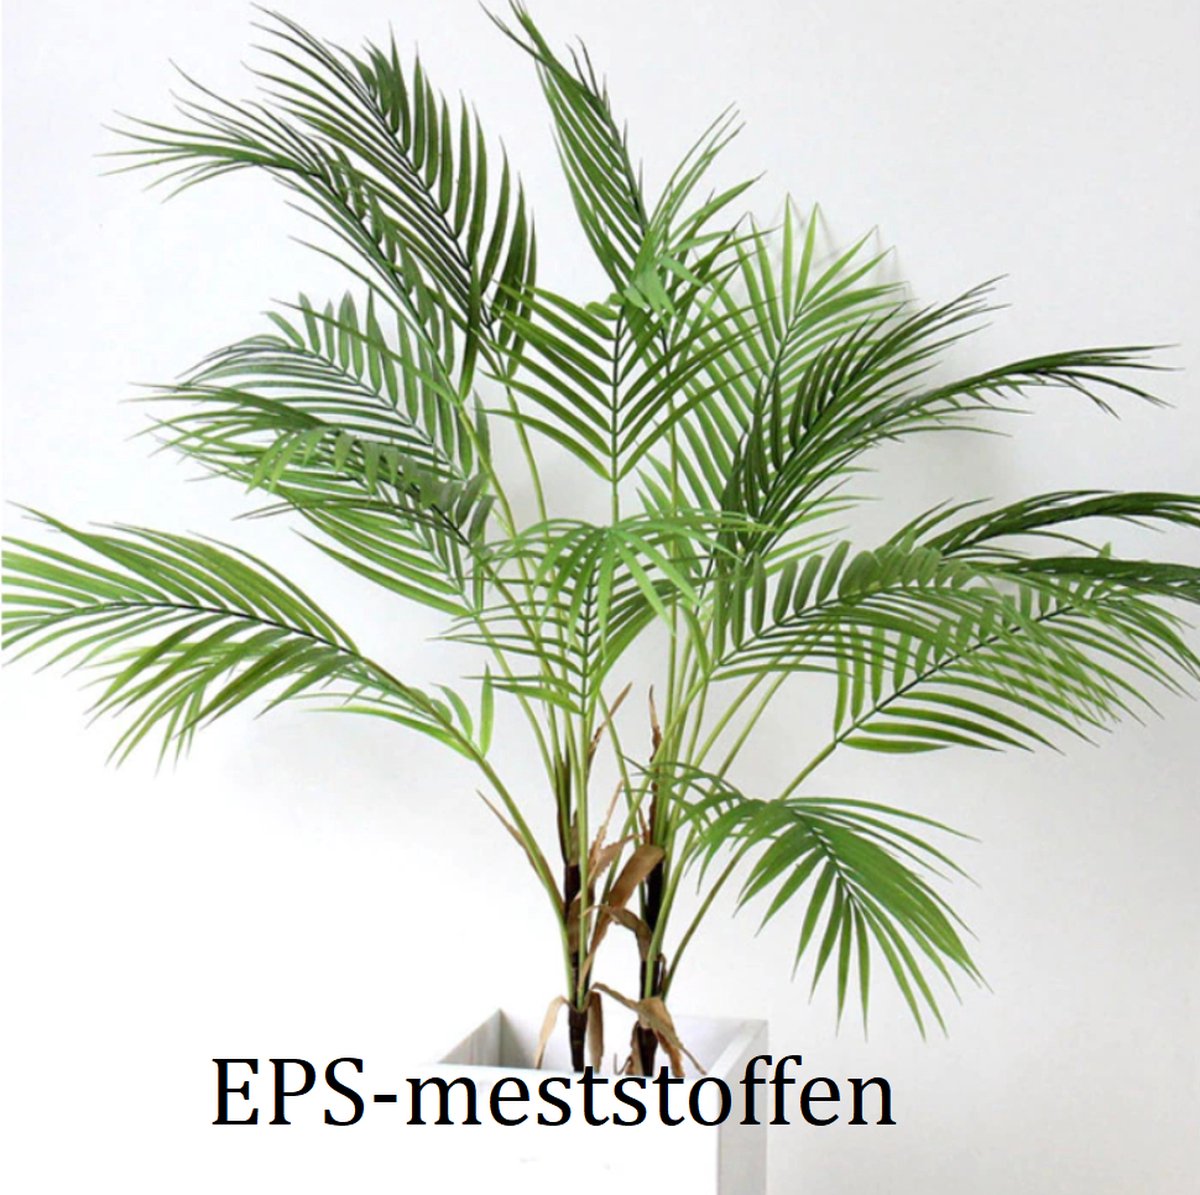 EPS LED palmvoeding 500 ml voor de kweek onder LED licht.